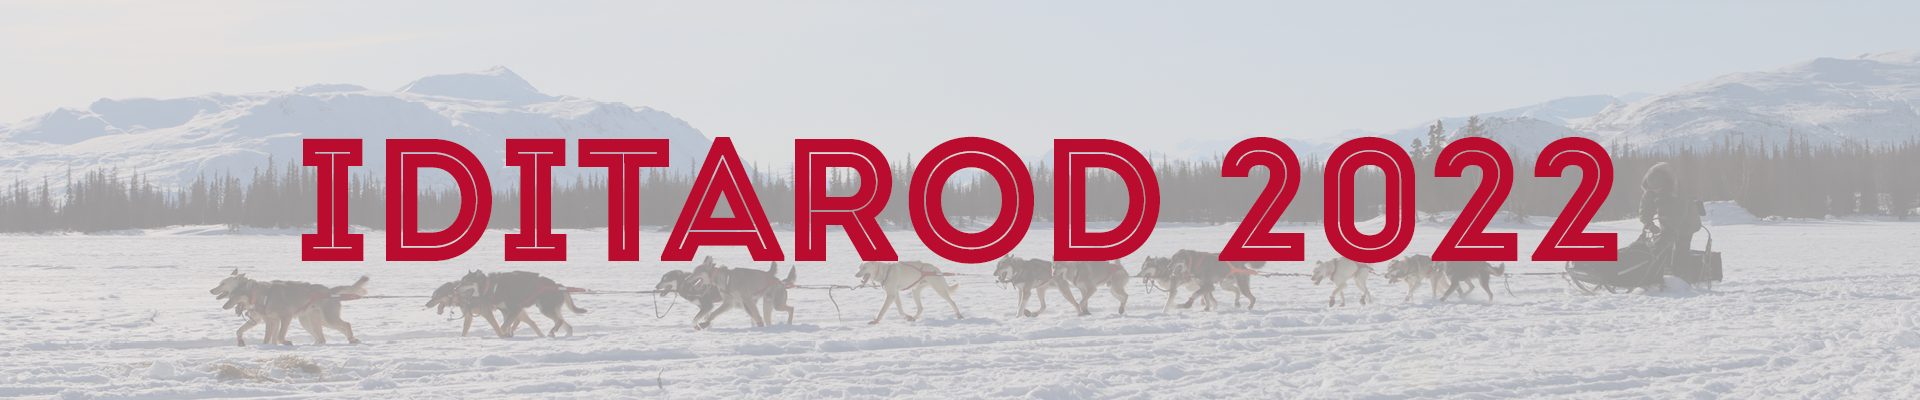 Iditarod 2022 banner